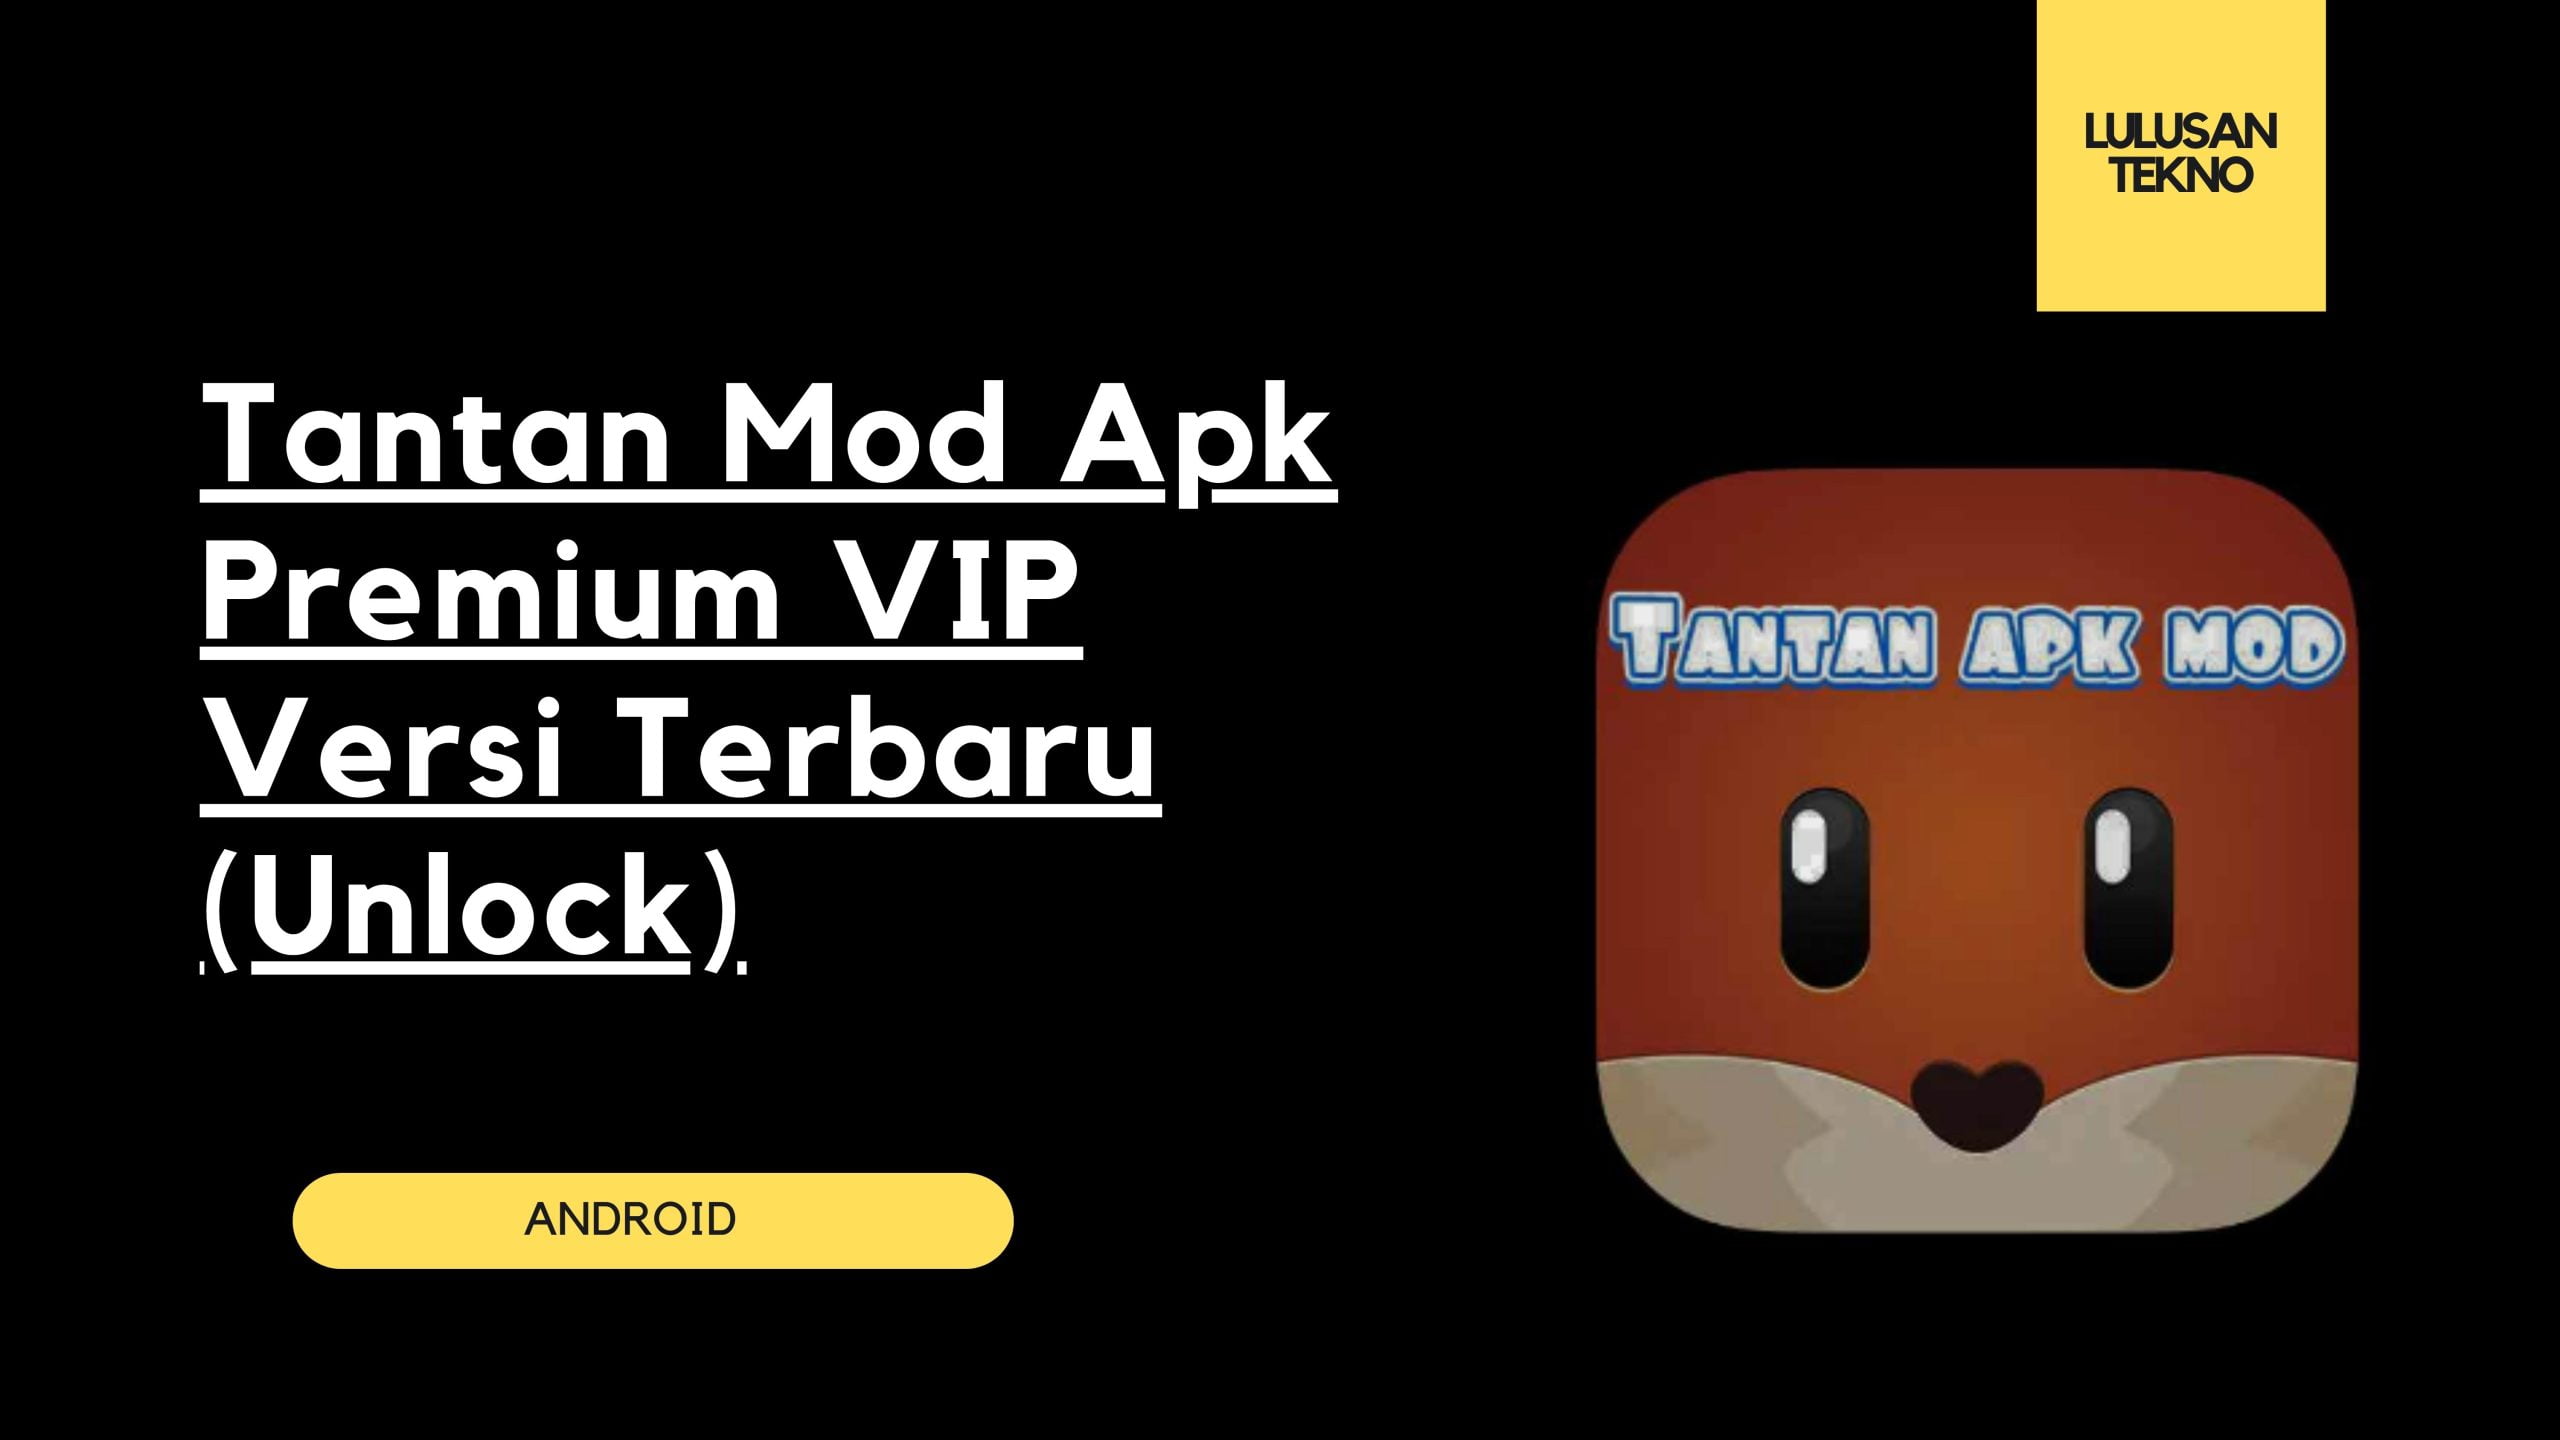 Tantan Mod Apk Premium VIP Versi Terbaru (Unlock)